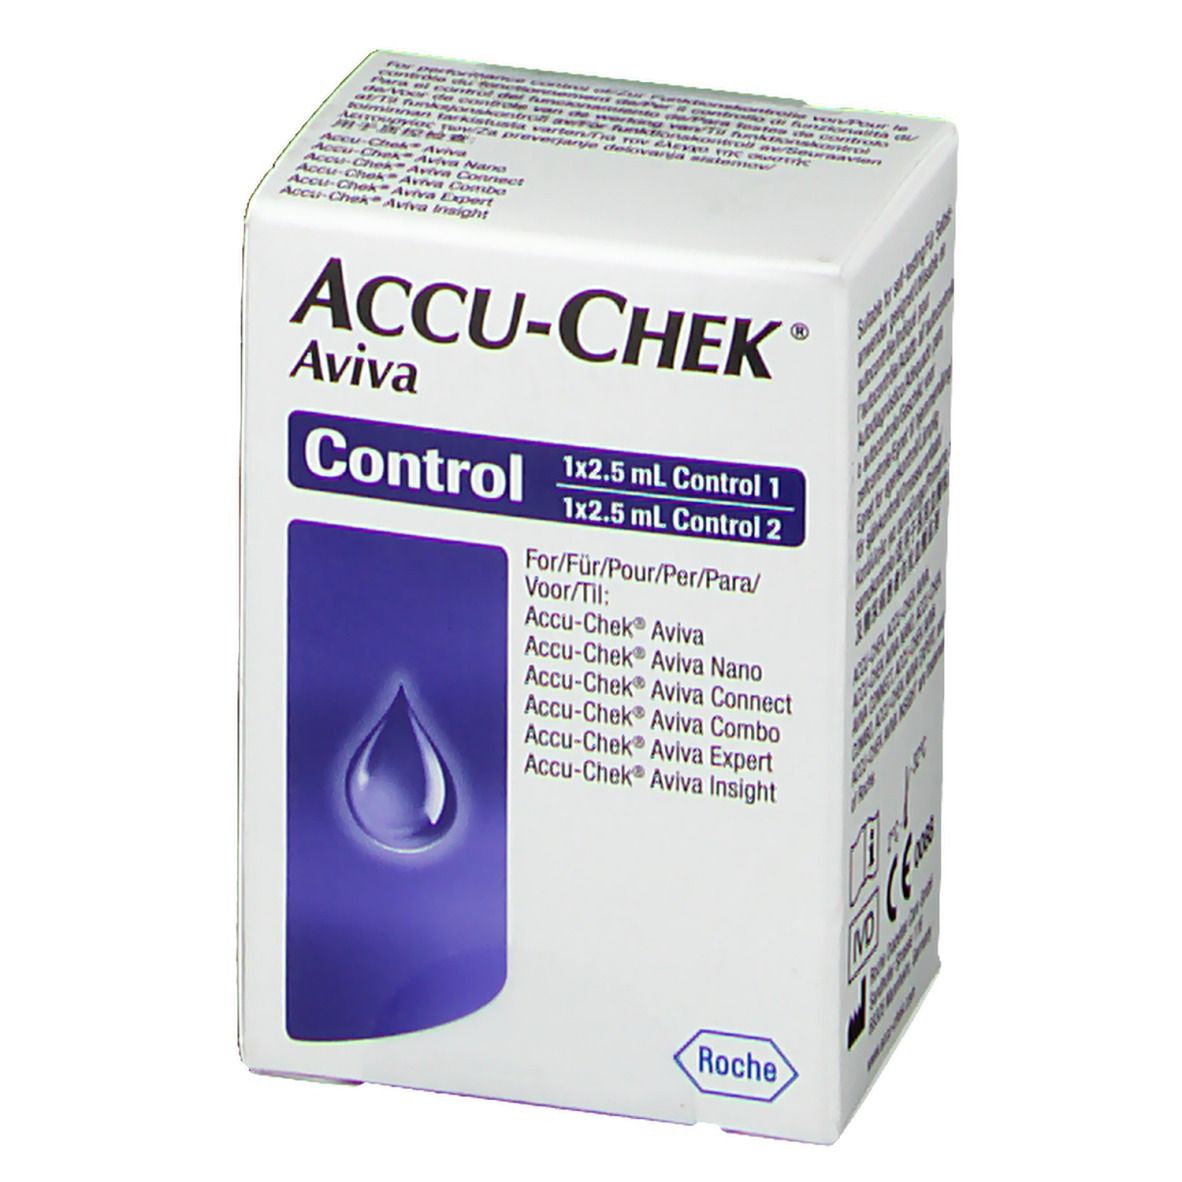 ACCU-CHEK® Aviva Control